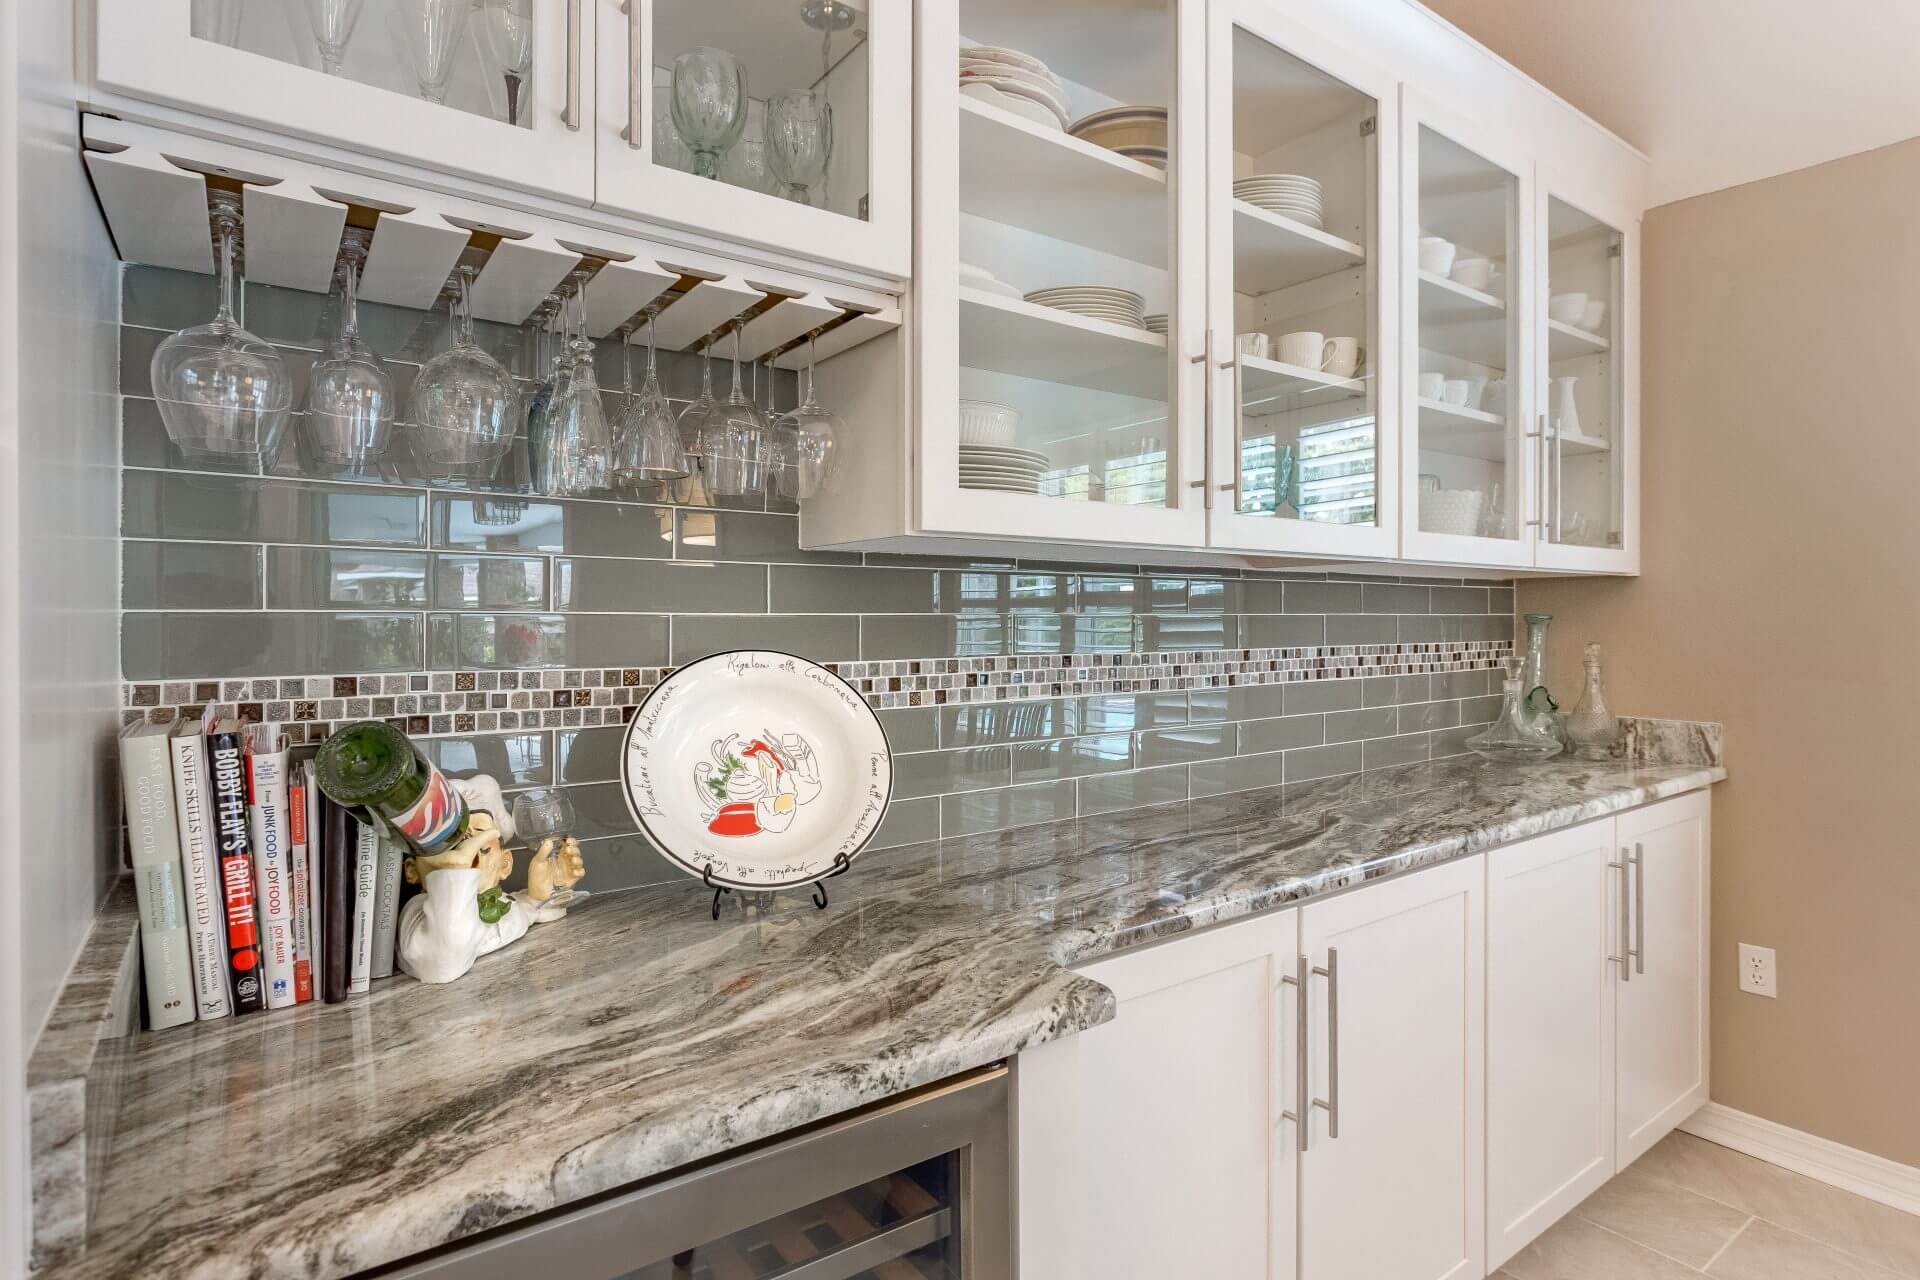 Custom Shaker cabinets with glass panels, granite countertops, and glass tile backsplash